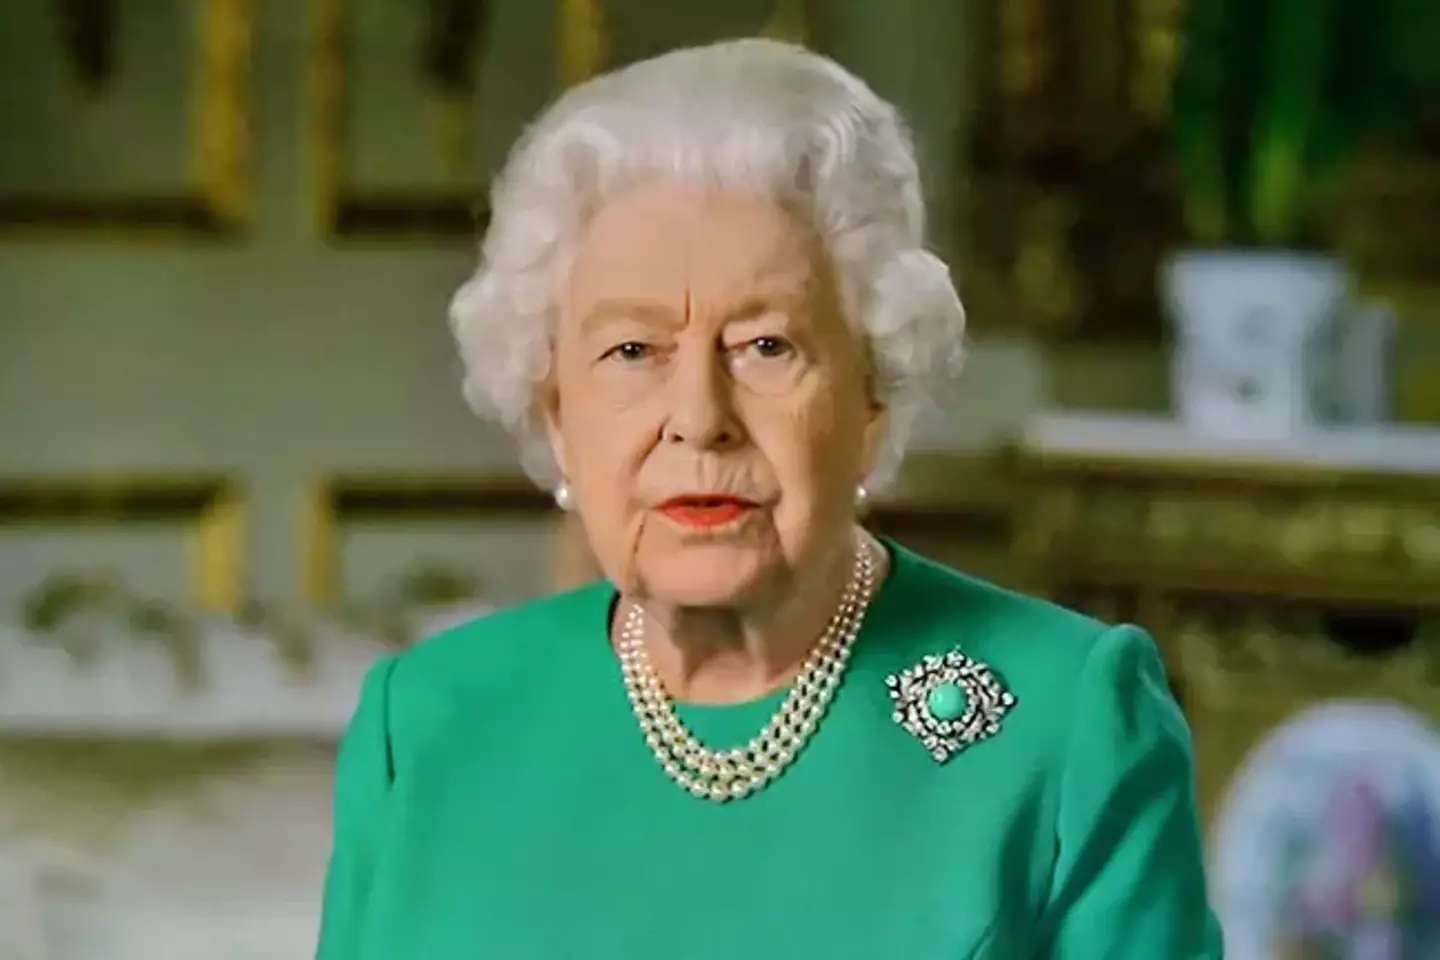 Queen Elizabeth II passed away at age 96.